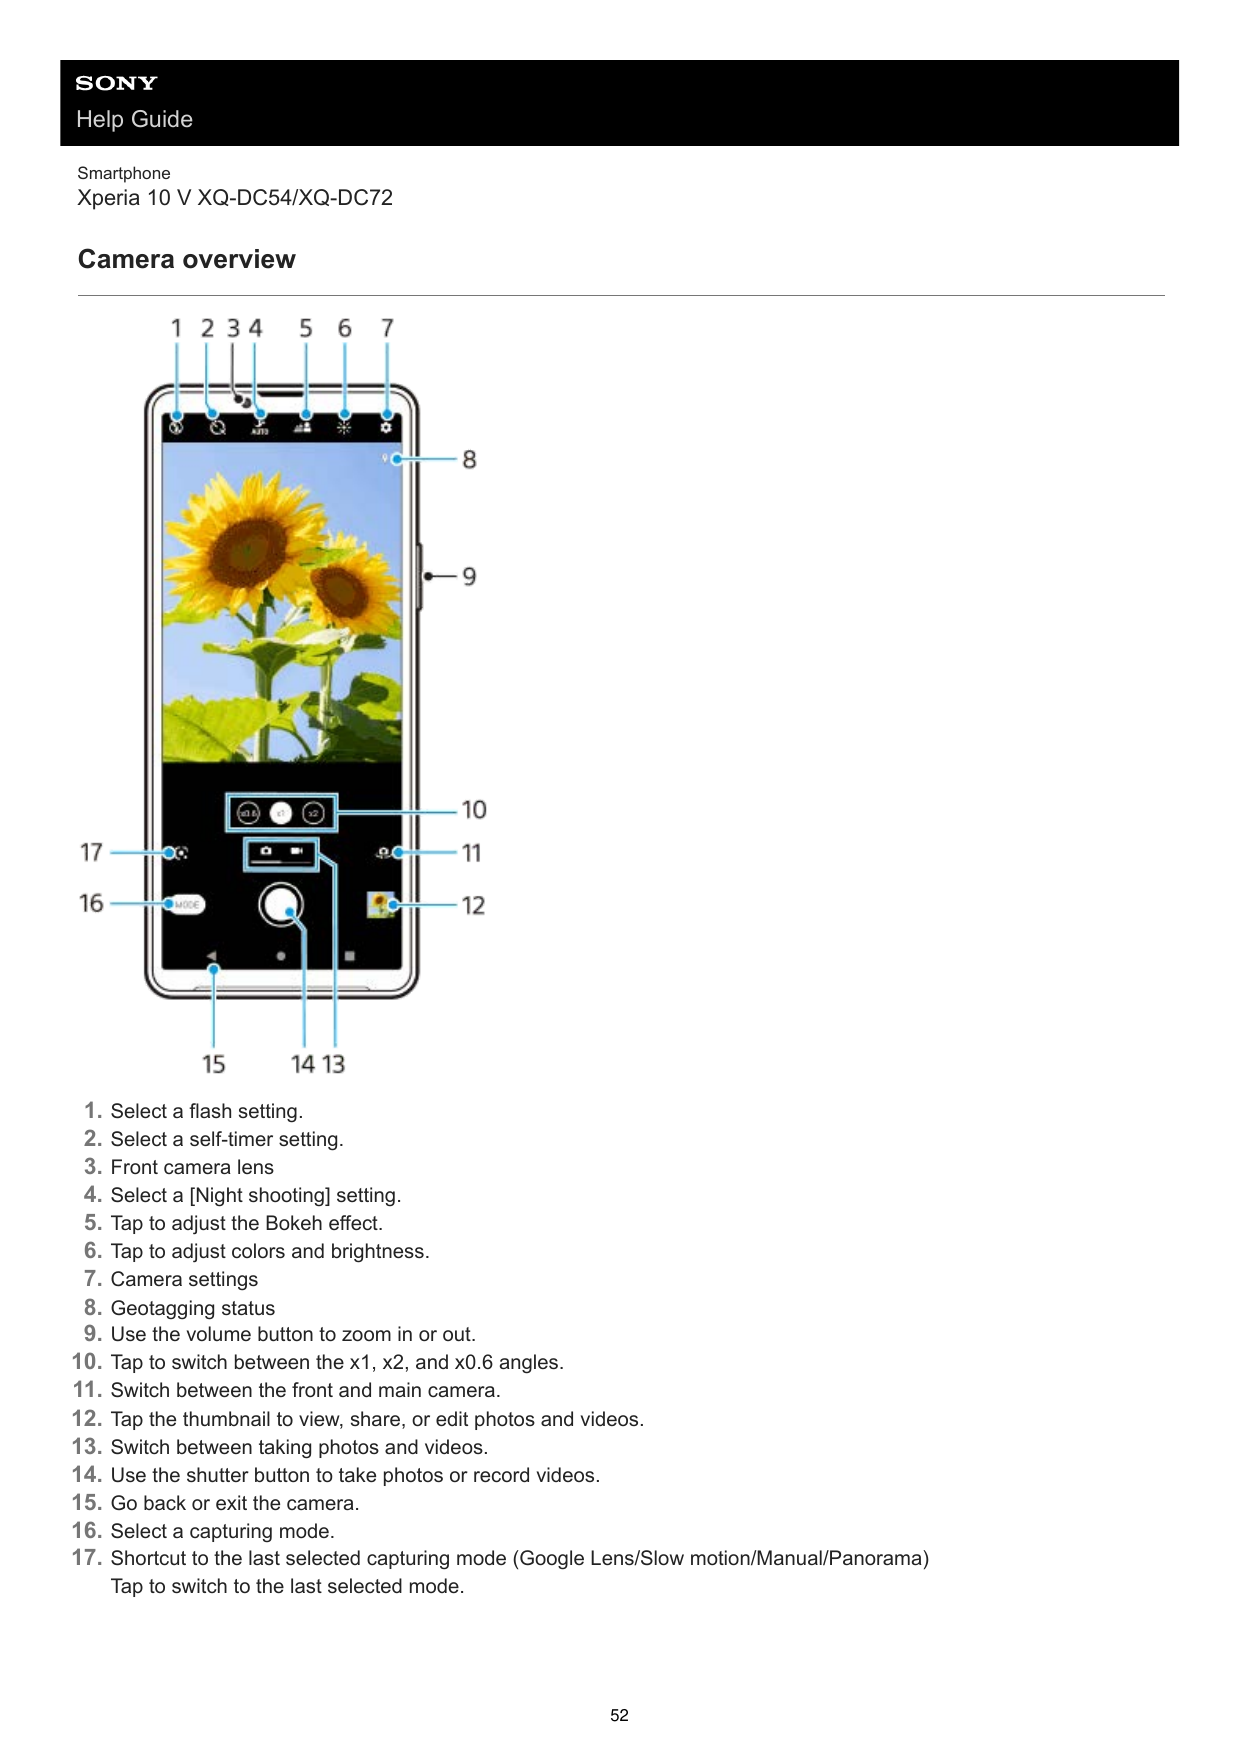 Help GuideSmartphoneXperia 10 V XQ-DC54/XQ-DC72Camera overview1.2.3.4.5.6.7.8.9.10.11.12.13.14.15.16.17.Select a flash setting.S